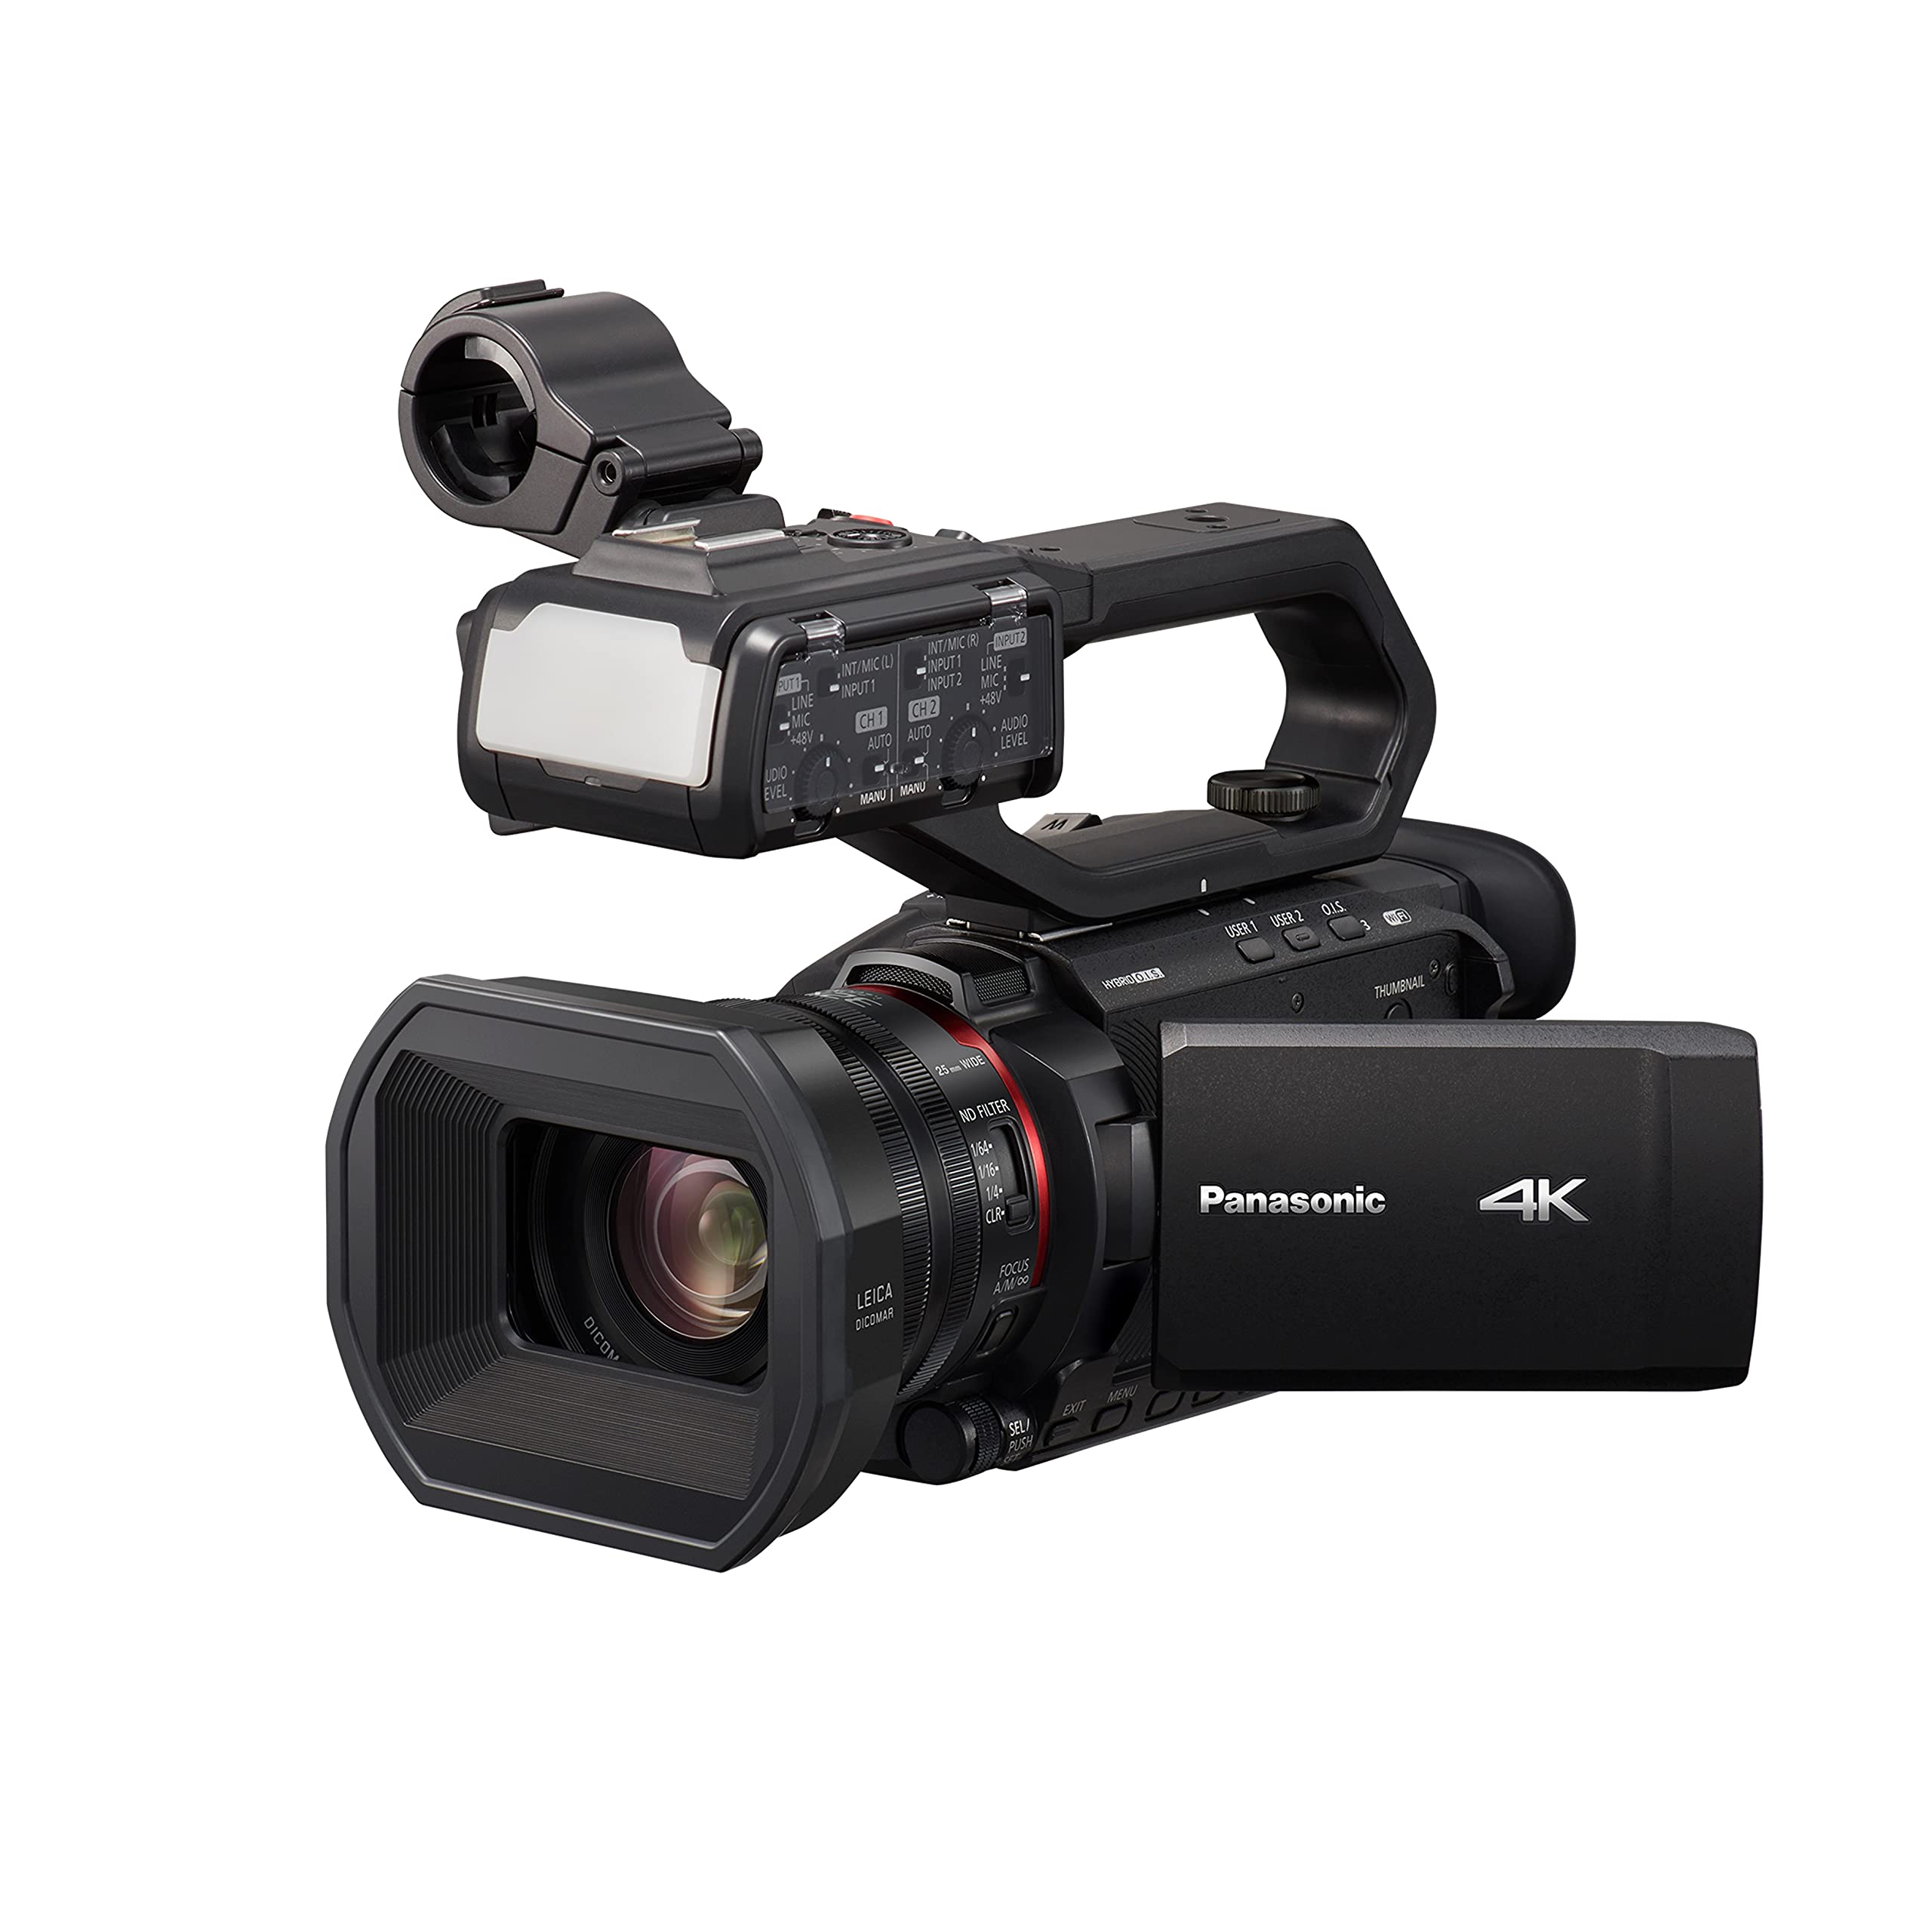 Panasonic HC-X2000E Profi Camcorder (4K Video, Kamera mit LEICA Objektiv, 25mm Weitwinkel, 24x optischer Zoom, Autofokus, professionelle Videokamera)